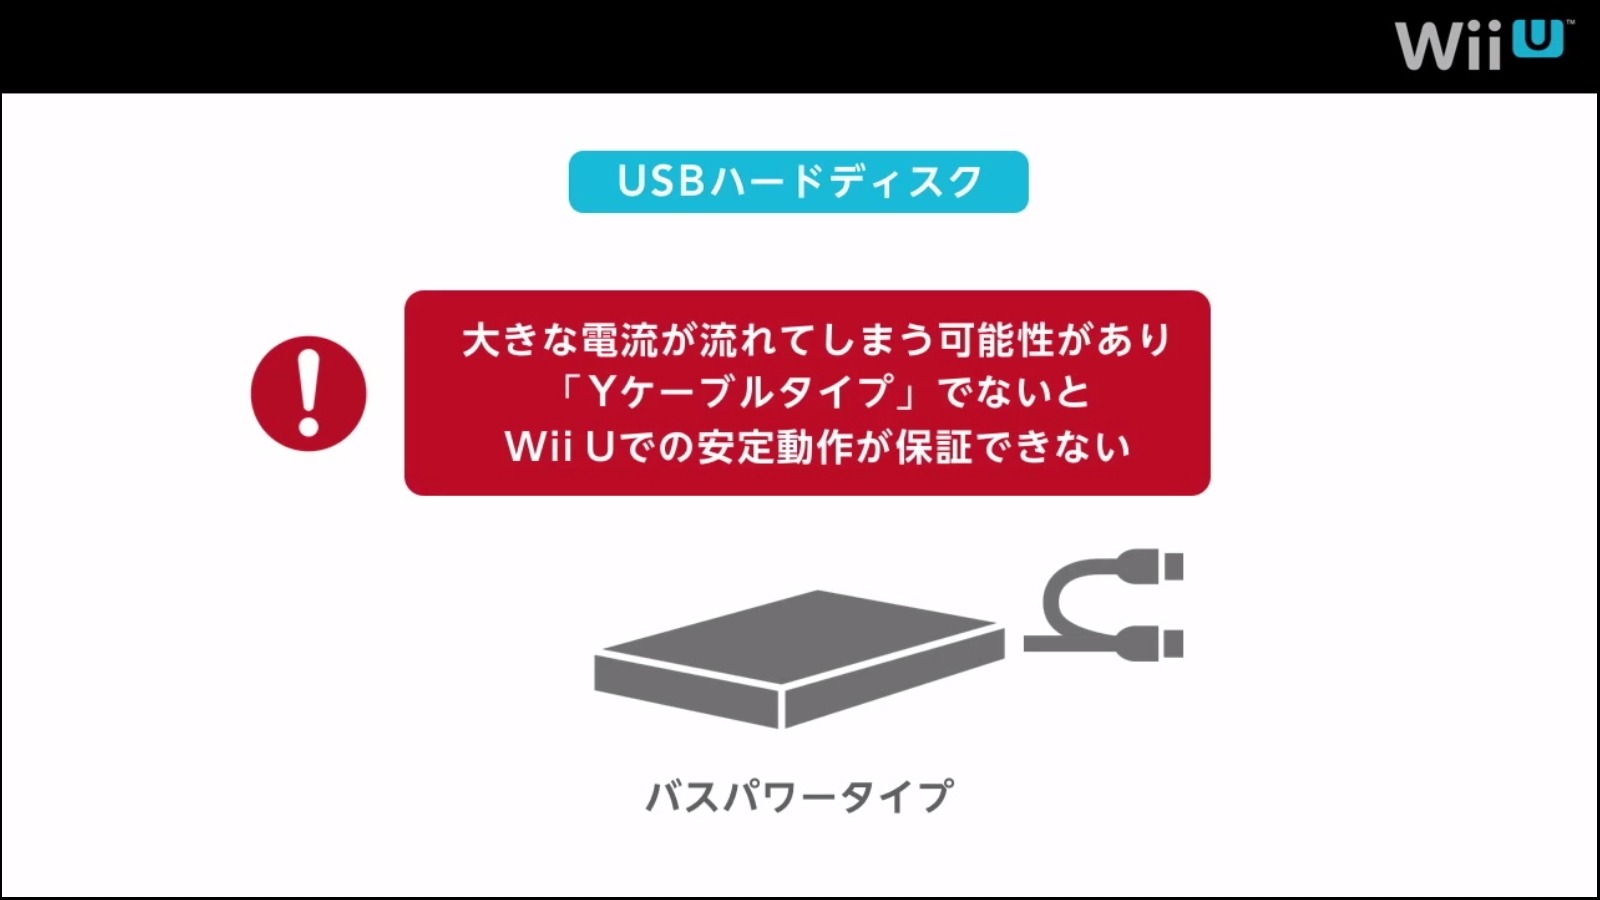 Nintendo Direct Usb記録メディアは2tbまで認識 接続の際にはフォーマット必須 Wii Uのデータ管理をチェック 3枚目の写真 画像 インサイド